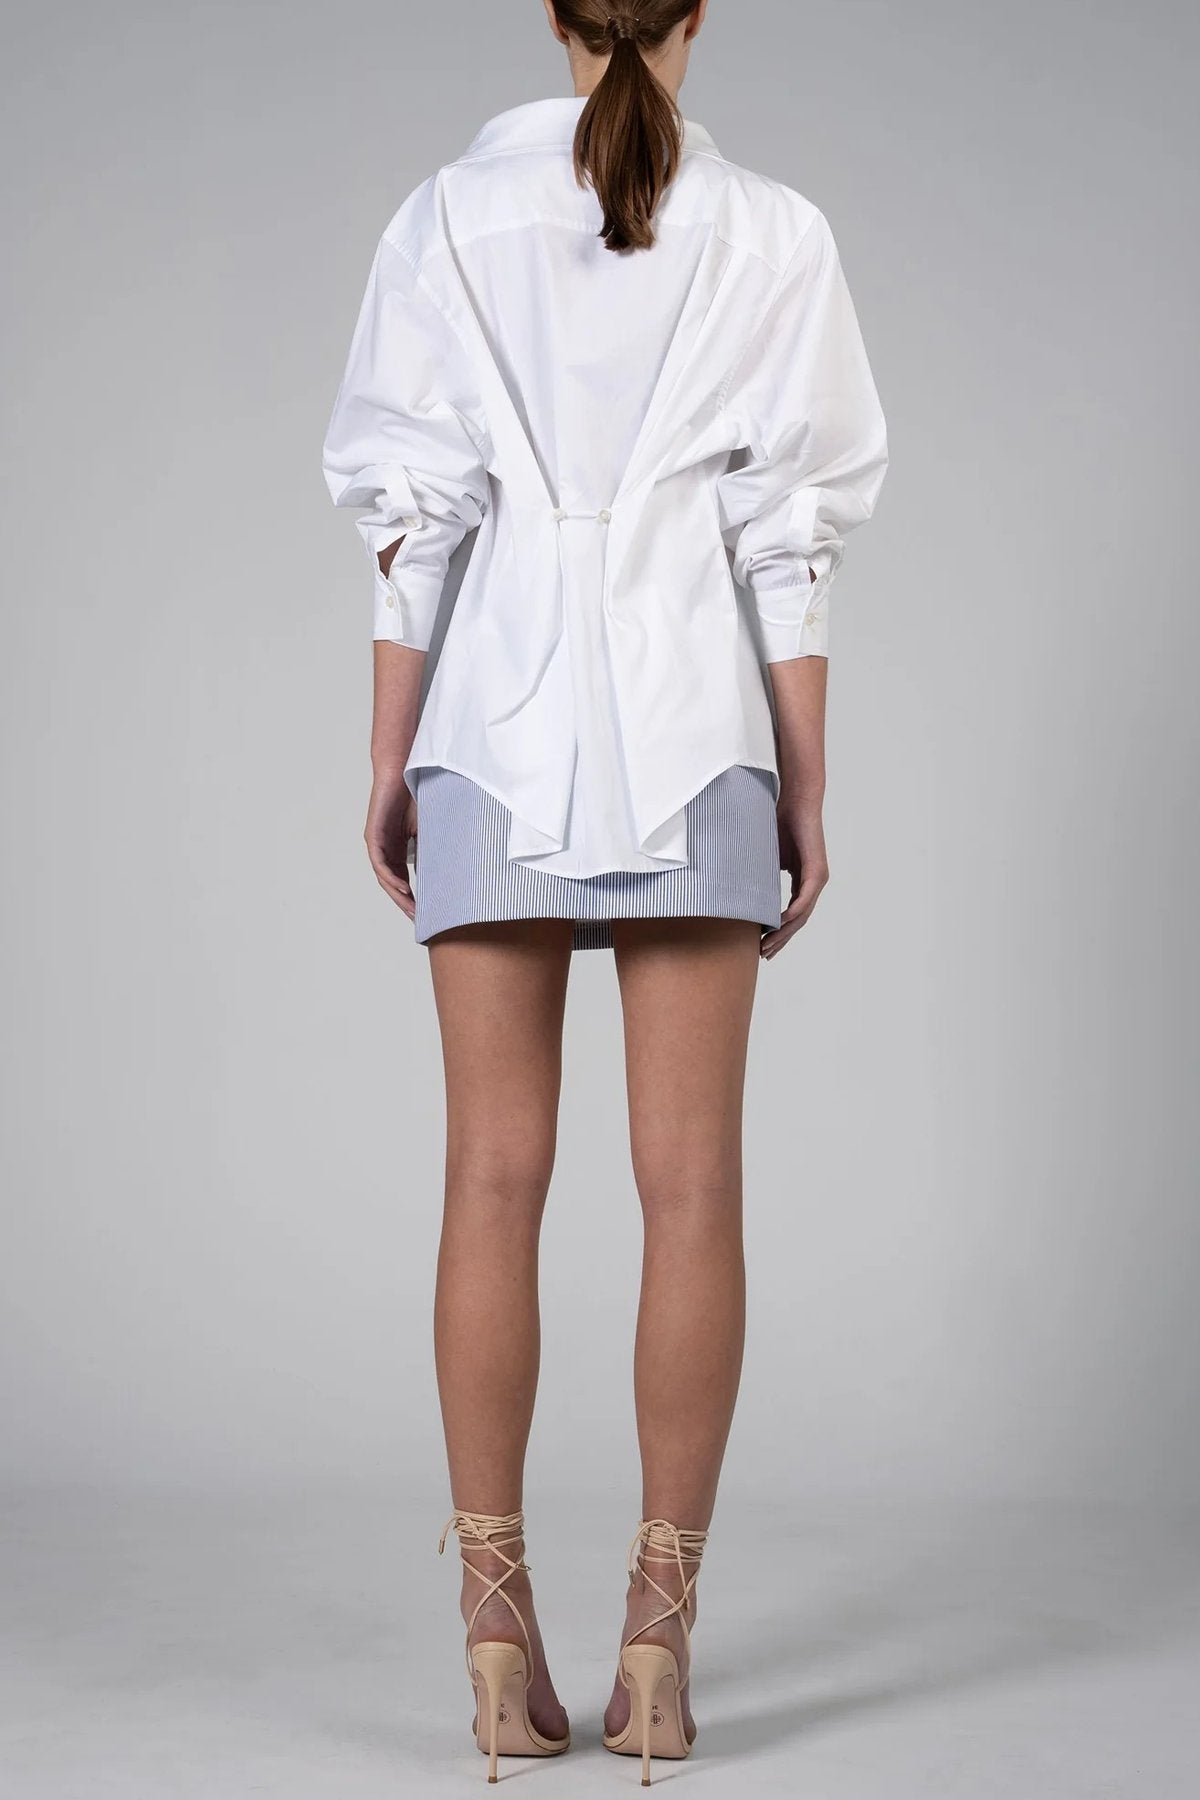 Tasha Button Up in White - shop-olivia.com